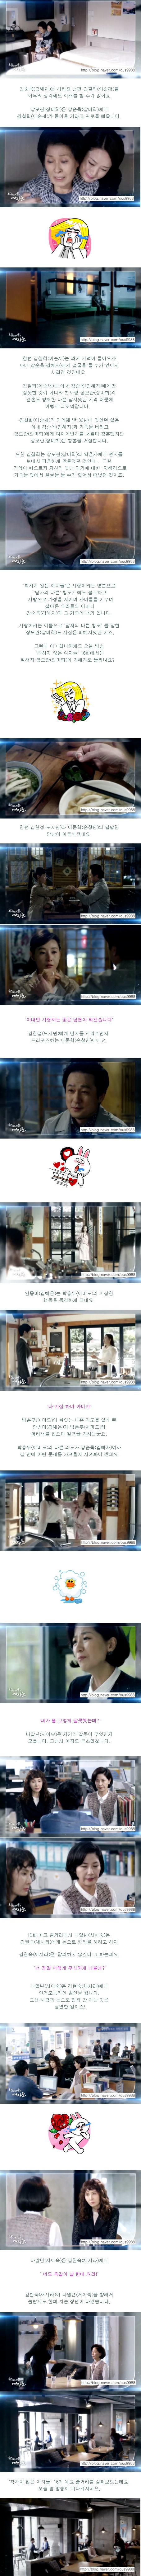 episode 16 captures for the Korean drama 'Unkind Women'